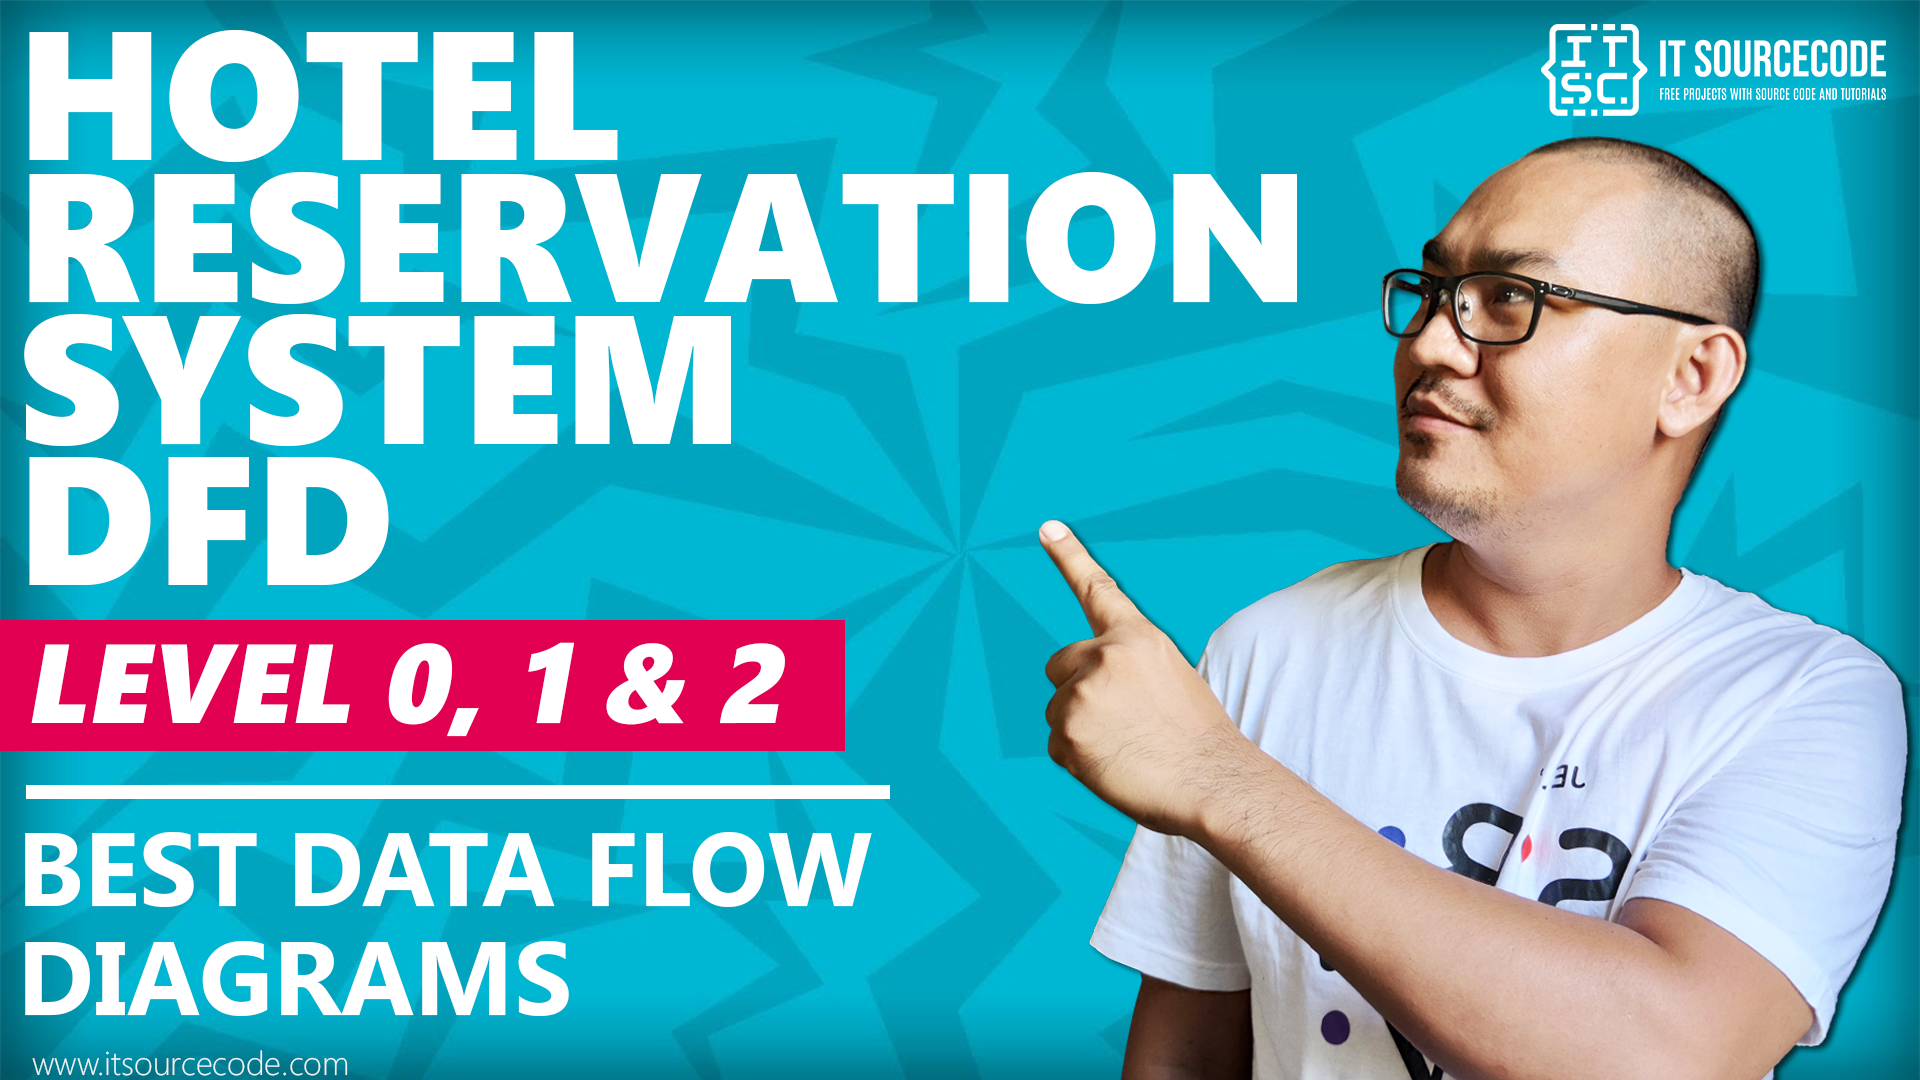 Best Data Flow Diagram - Hotel Reservation System DFD Level 0 1 2 - 2021